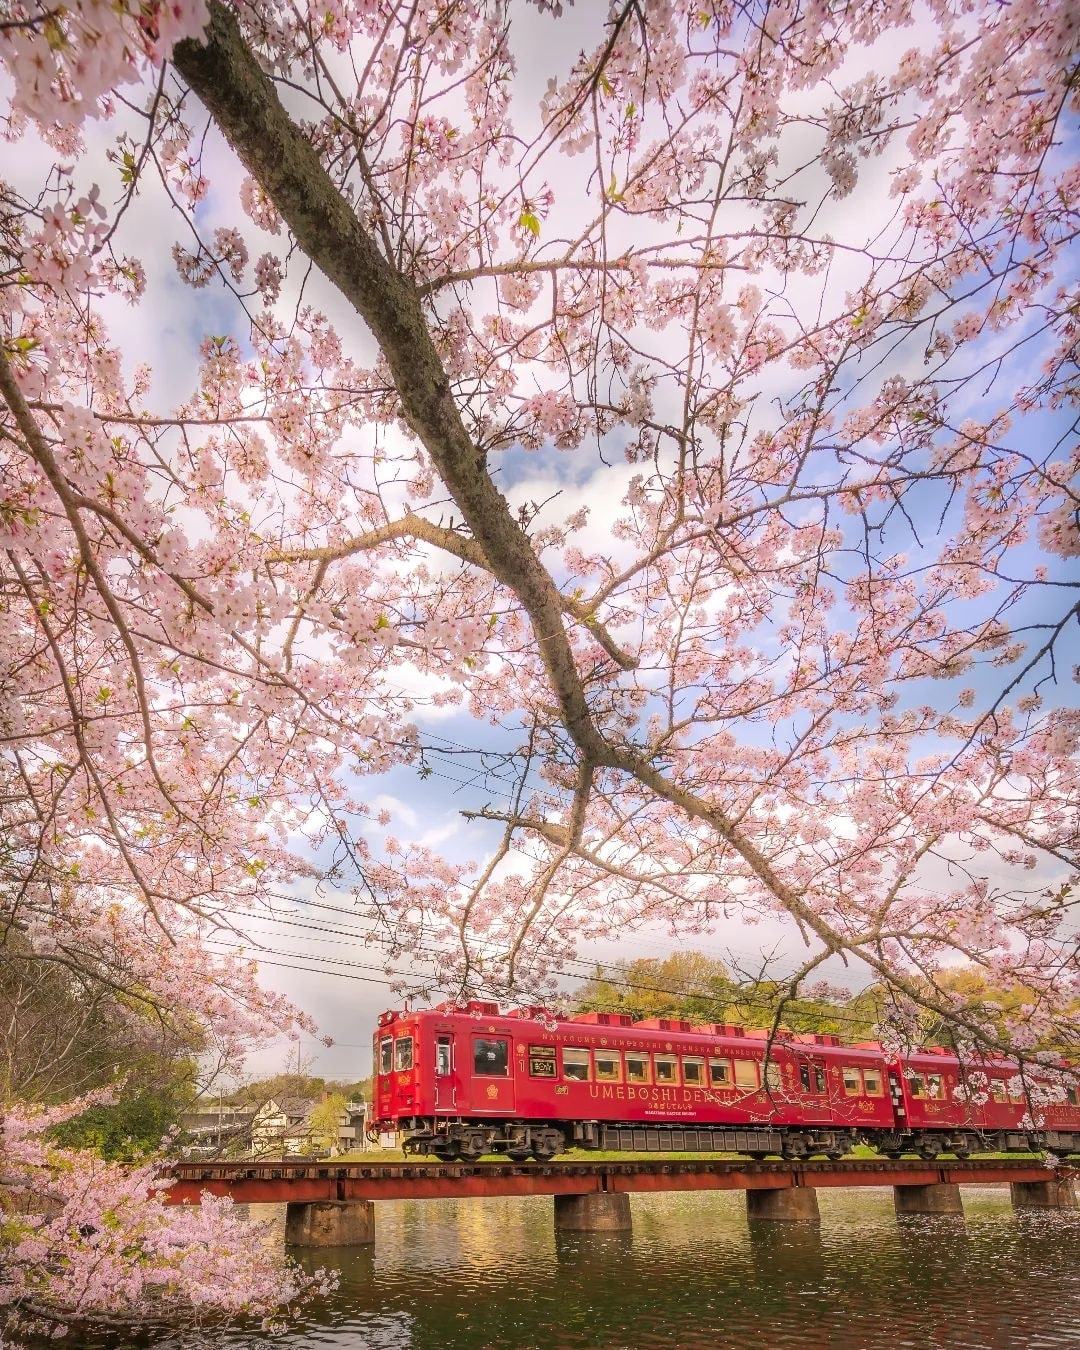 Cvetanje trešnje u Japanu - Page 2 F64b616082383fa14ff274c27aea2b2110b6b986